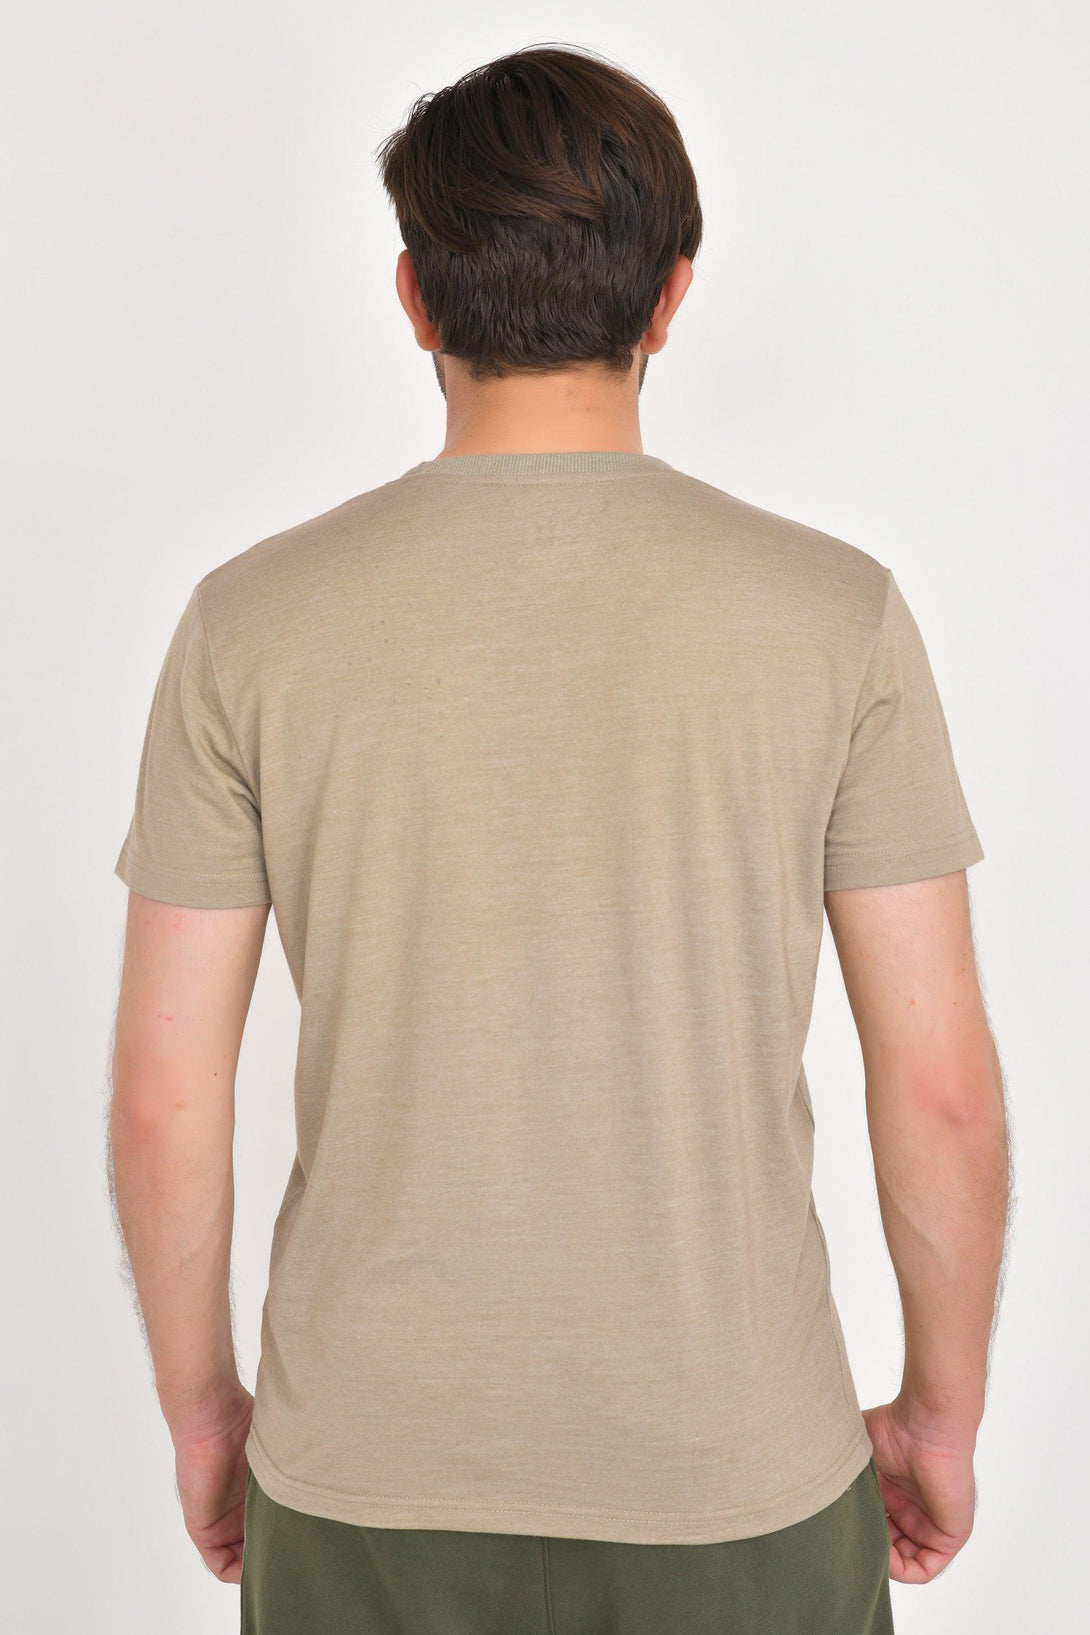 Round Neck T-Shirts | NAVY MELANGE - AQUA - STONE - Pack of 3 - FTS